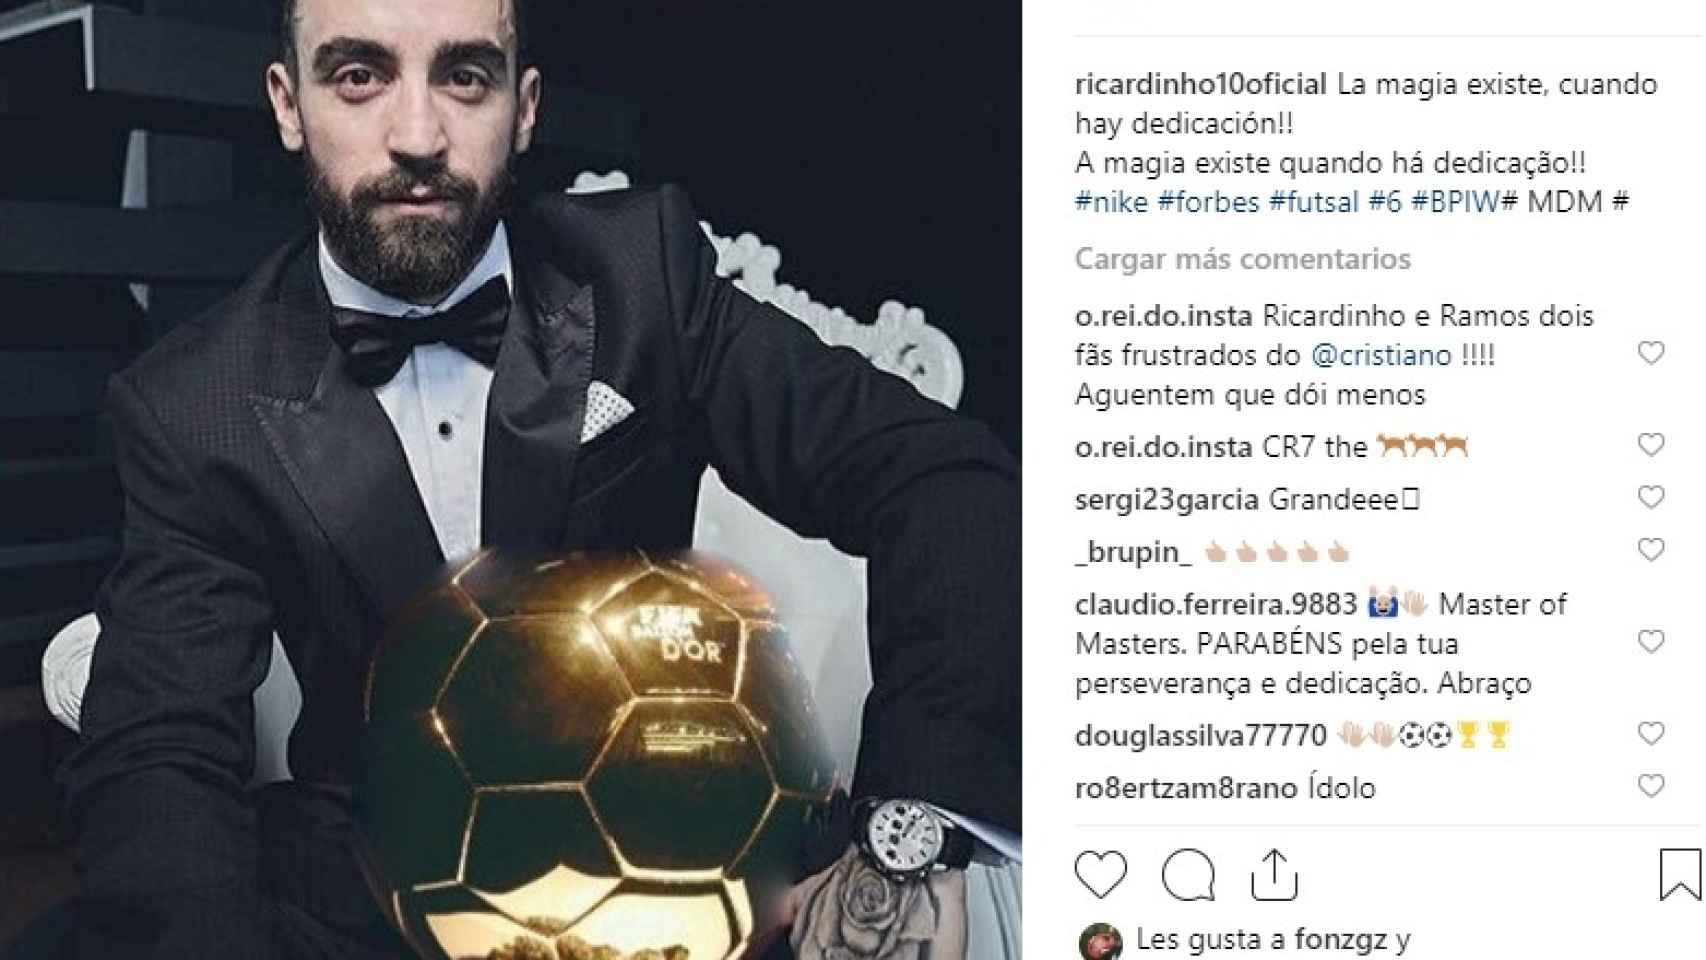 Ricardinho con su sexto balón de oro. Foto Instagram: (@ricardinho10oficial)